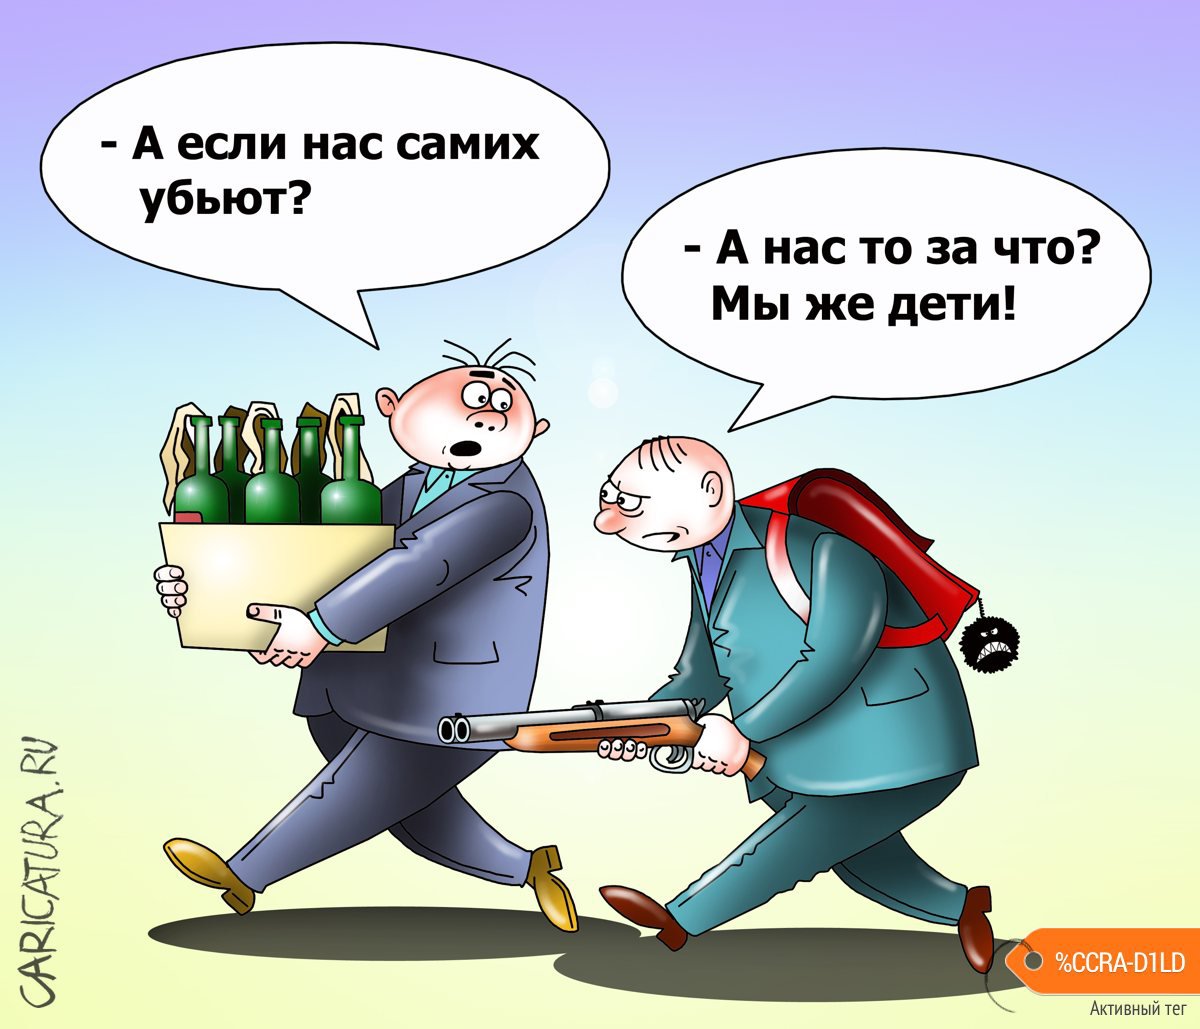 Карикатура "Саратовские подростки готовили нападение на школу", Сергей Корсун